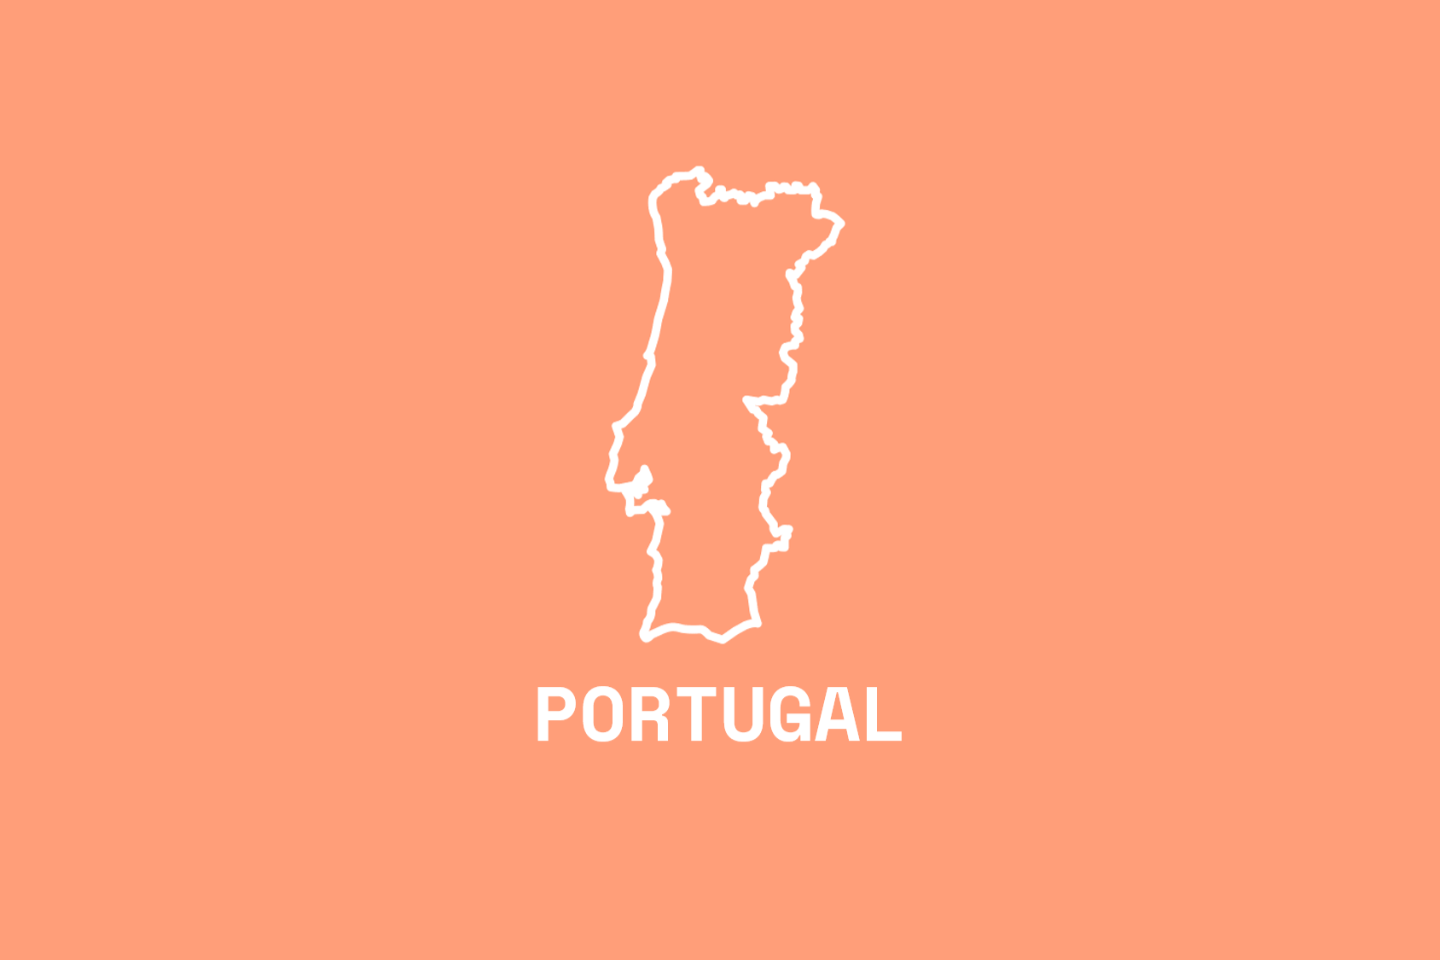 In Portugal